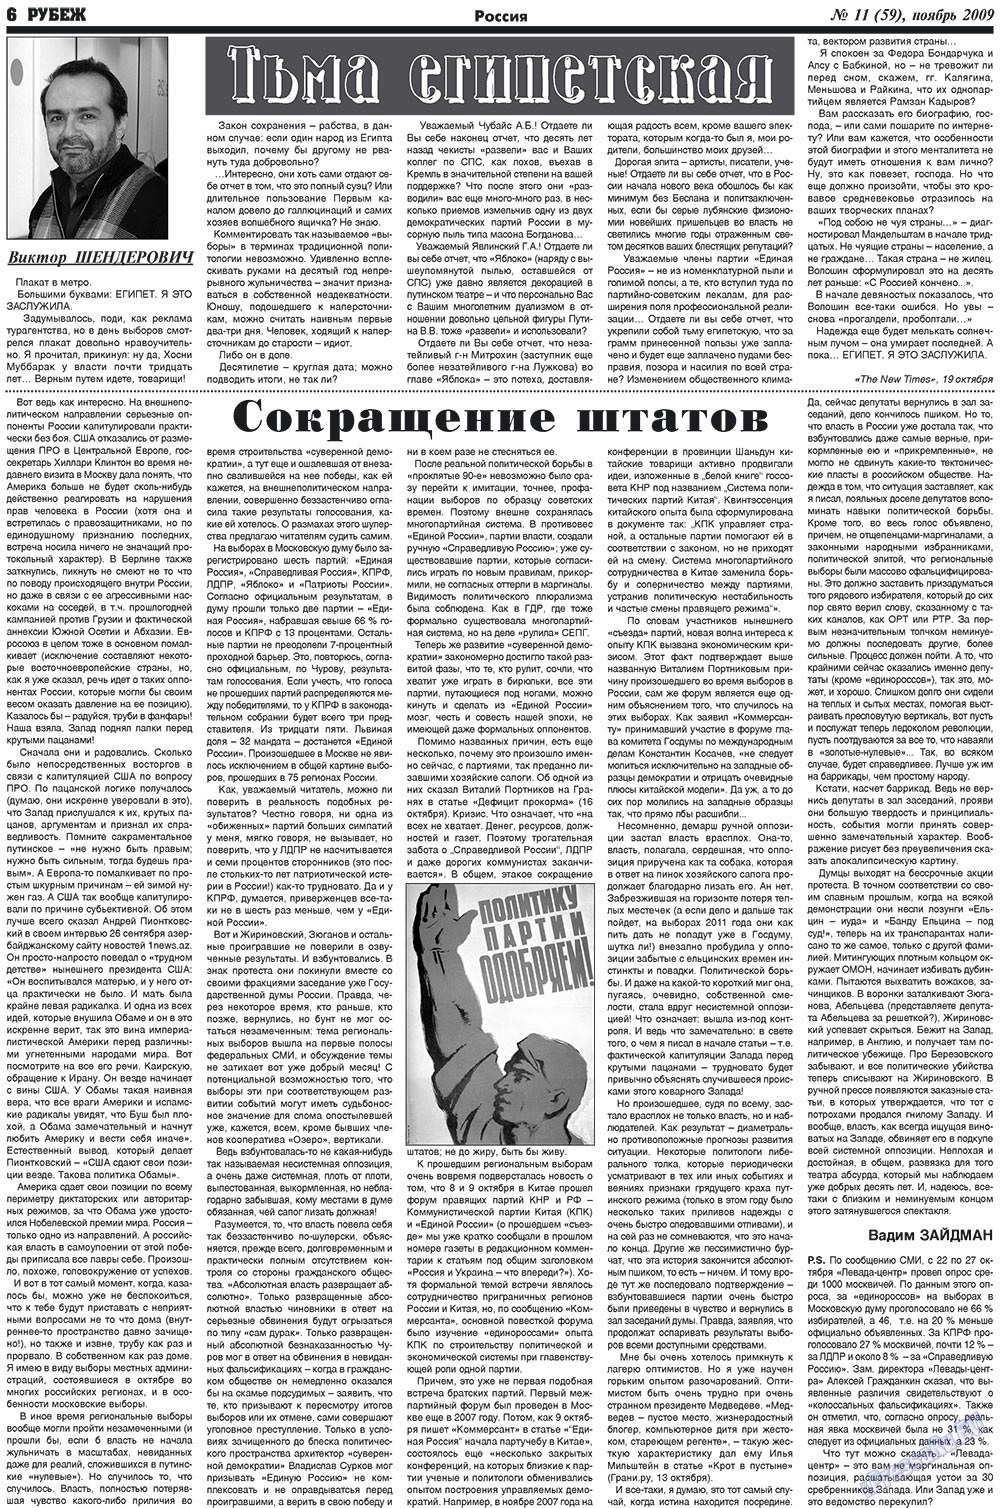 Рубеж, газета. 2009 №11 стр.6